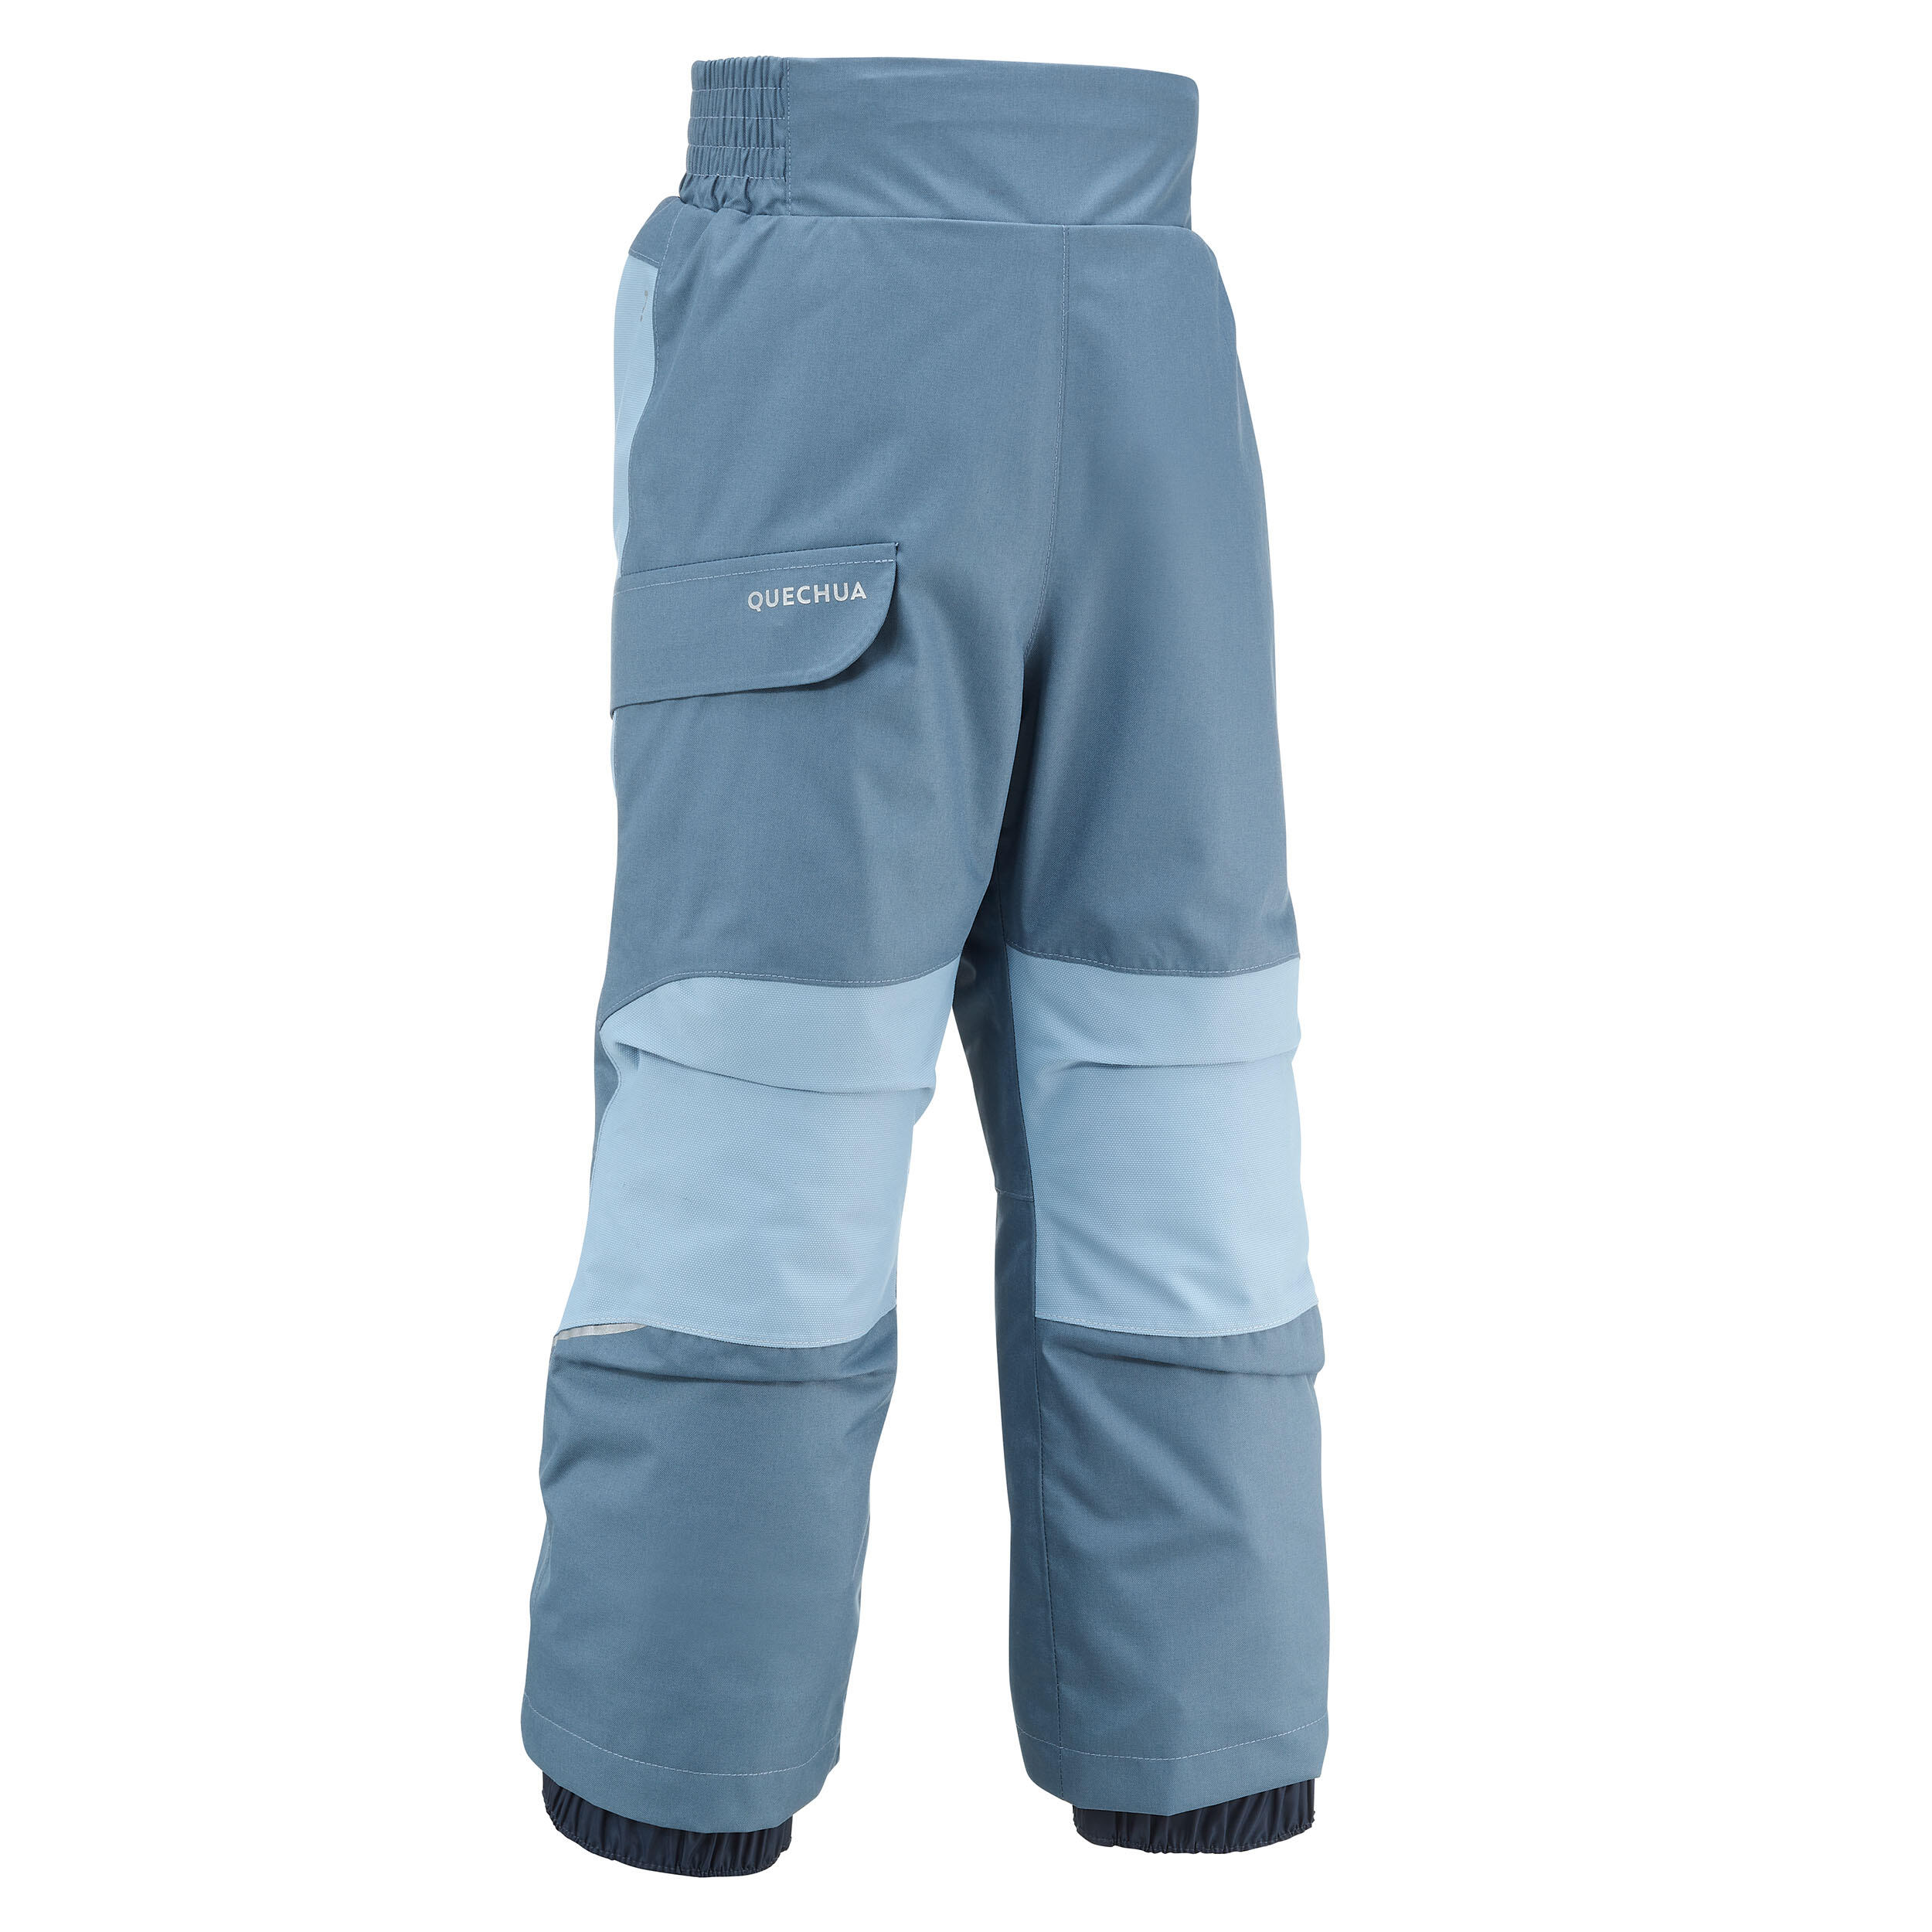  Pantalon Iarnă Călduros SH500 MOUNTAIN Fete 2 - 6 ani 